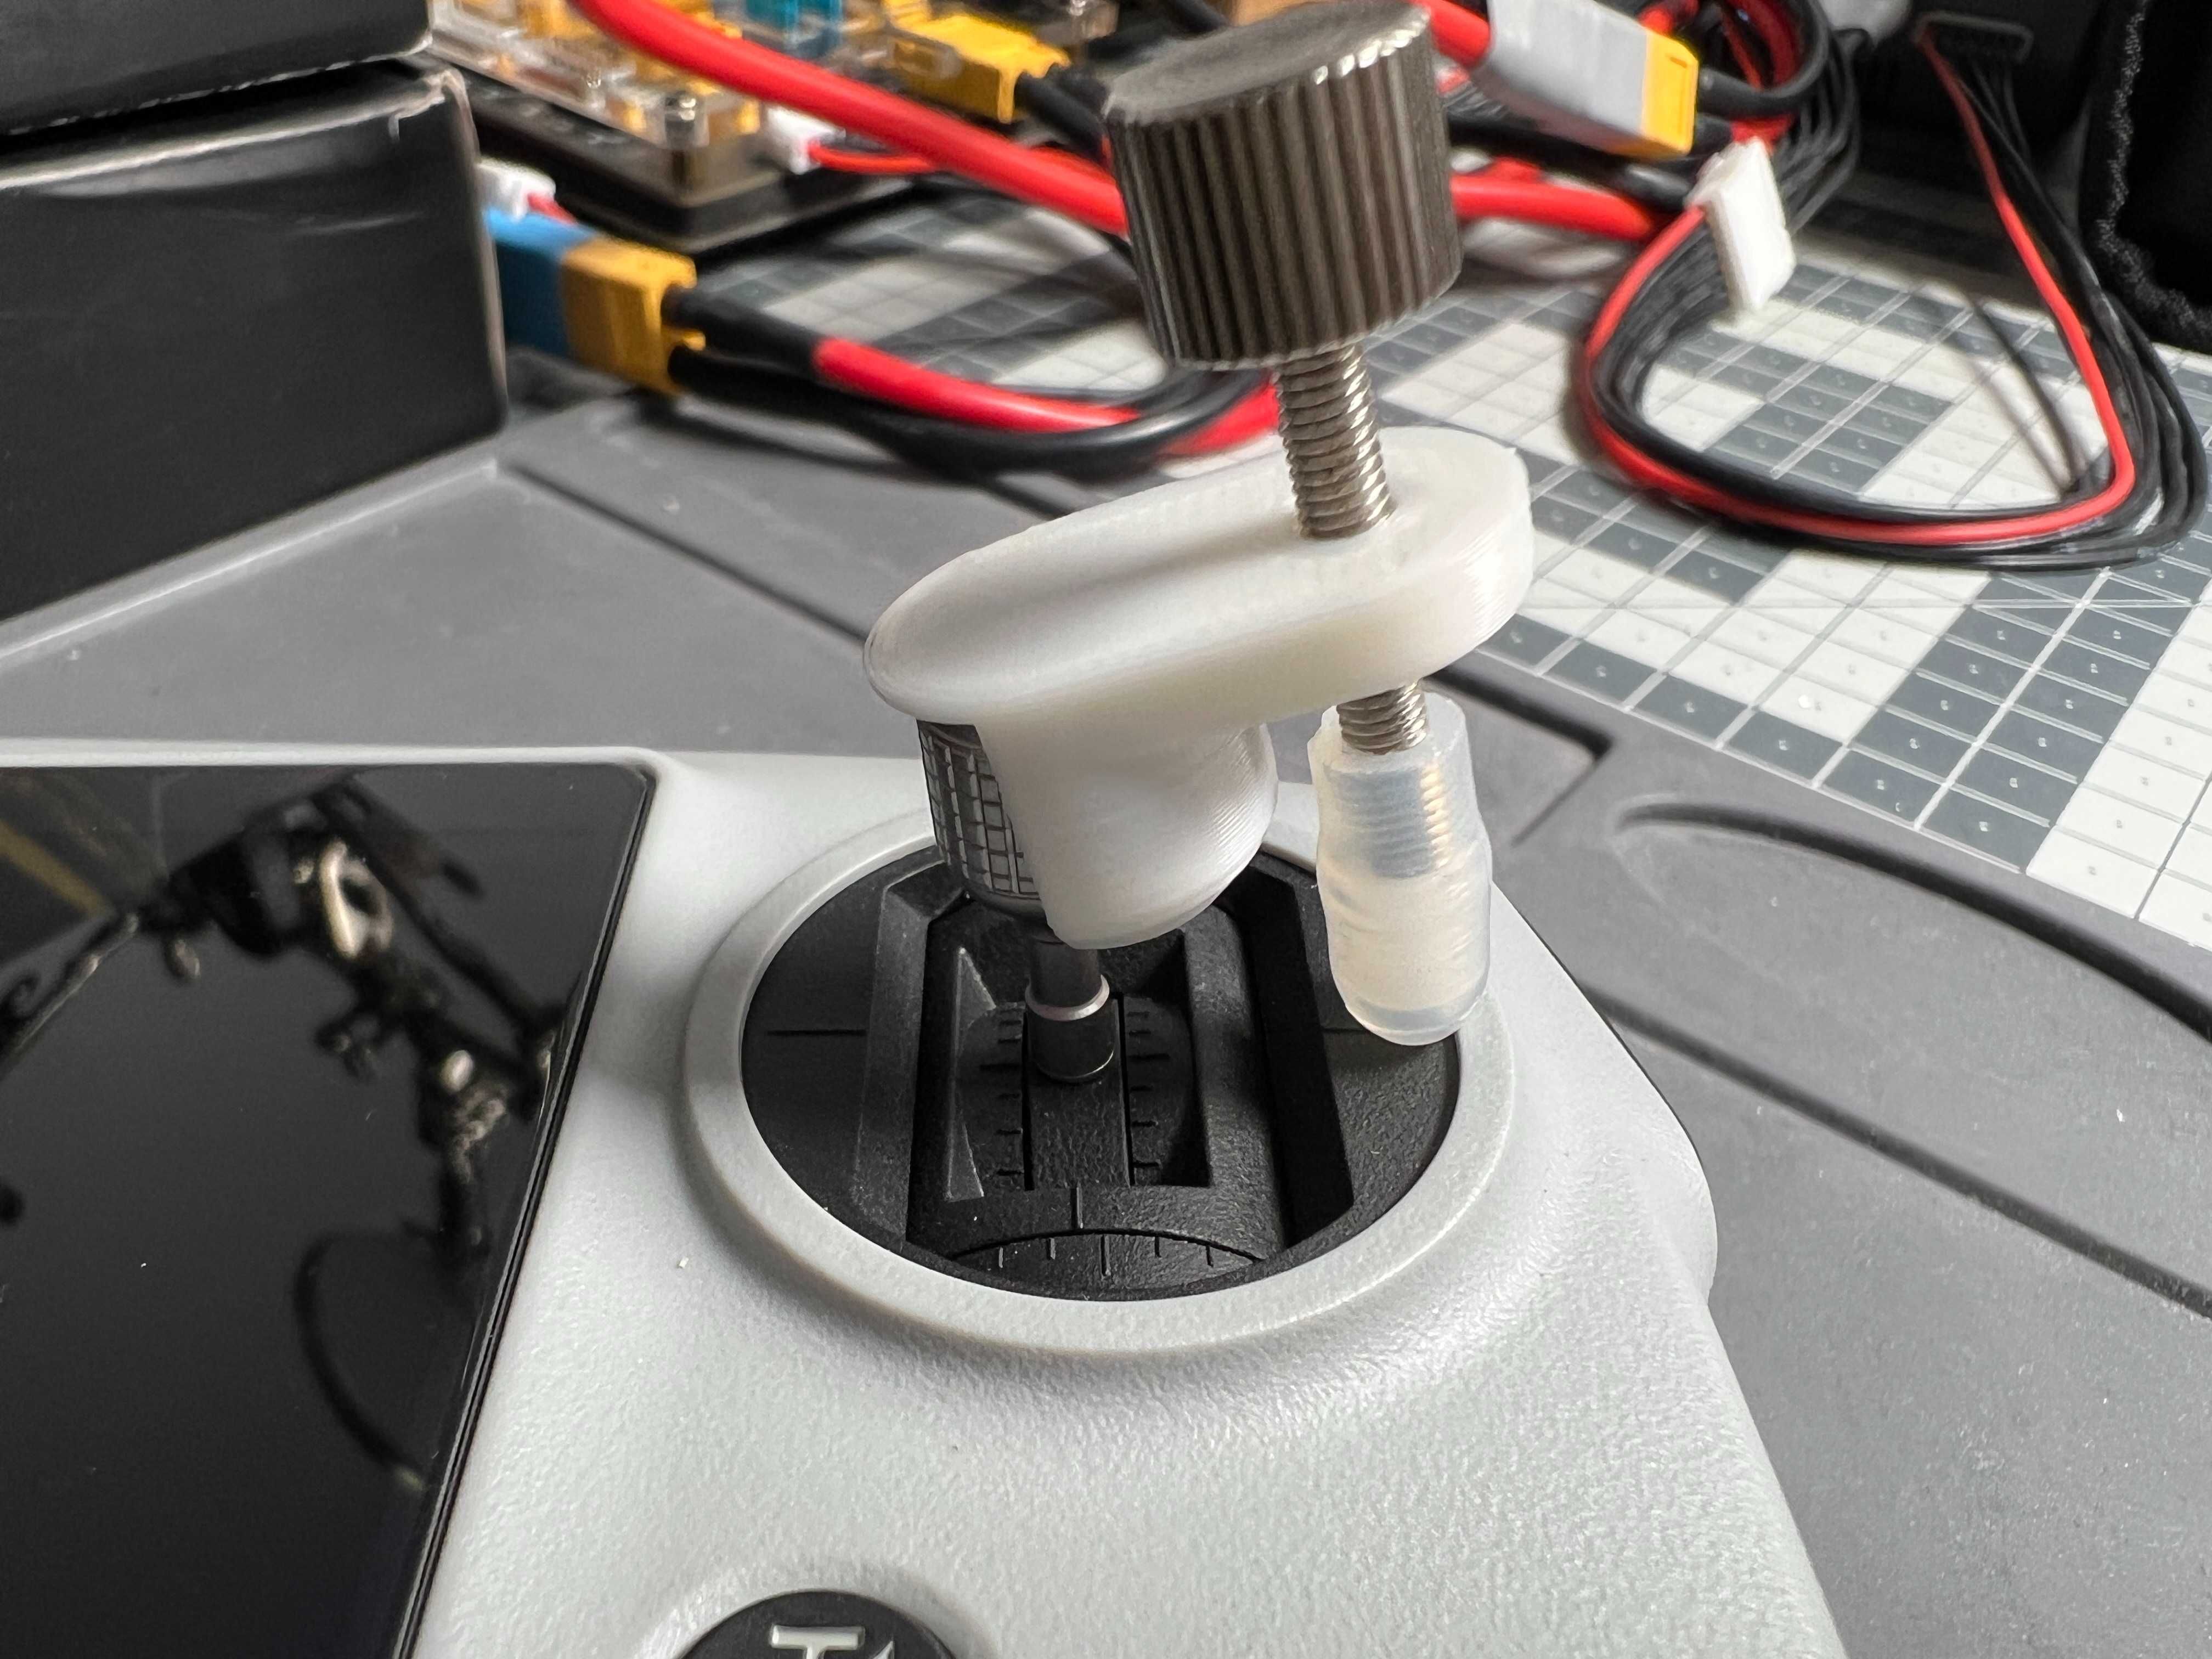 Nakładki Rocker Speed Controller na drążki aparatur DJI